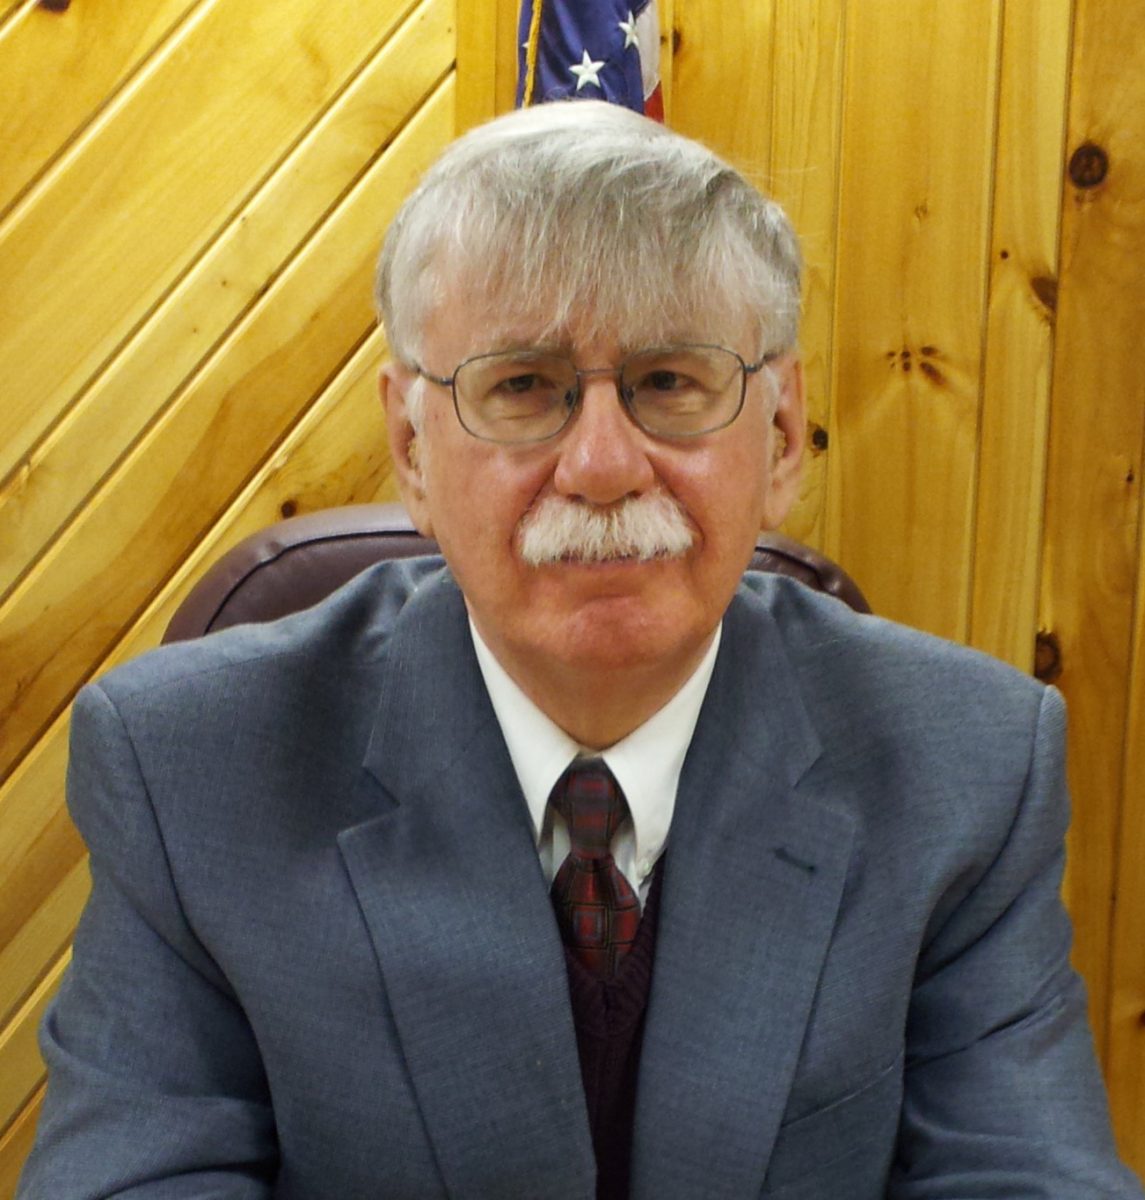 Merrill City Clerk resigns effective Jan. 3, 2022, at 4:31 p.m.